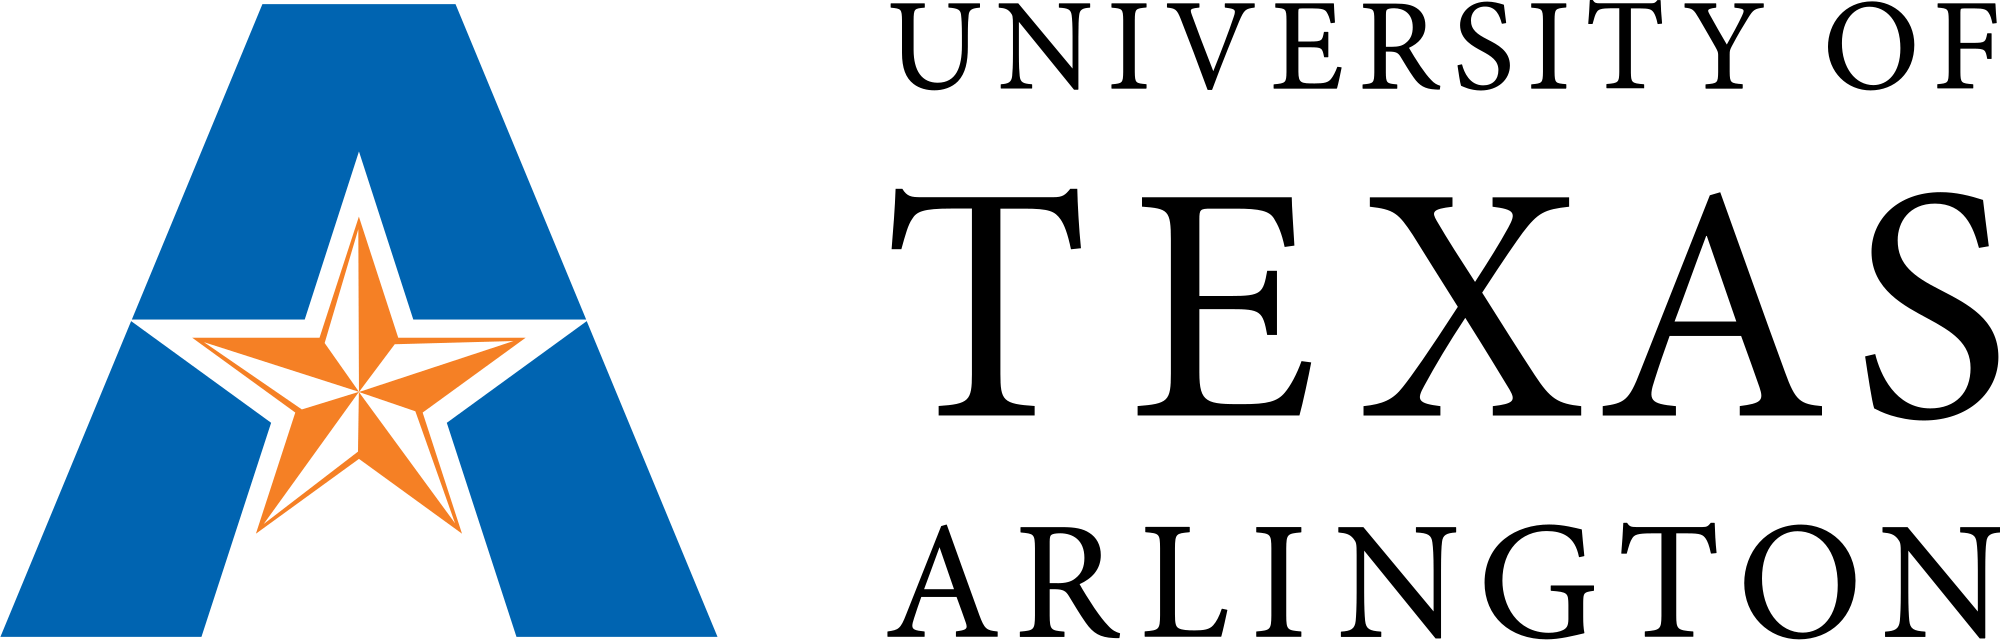 Arlington Logo - University of Texas at Arlington logo.svg